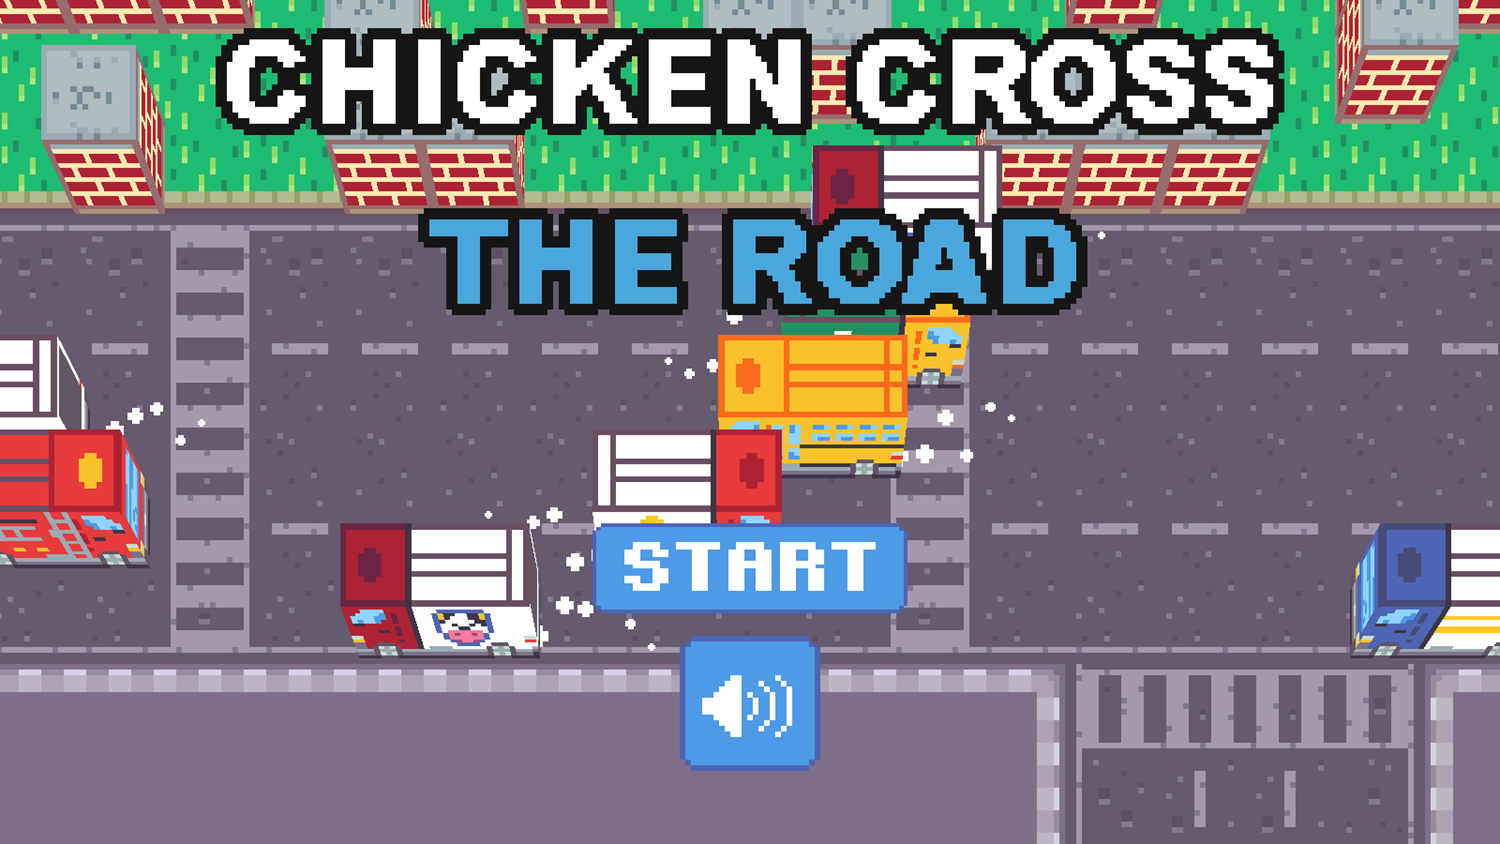 Chicken Cross The Road Game Welcome Screen Screenshot.